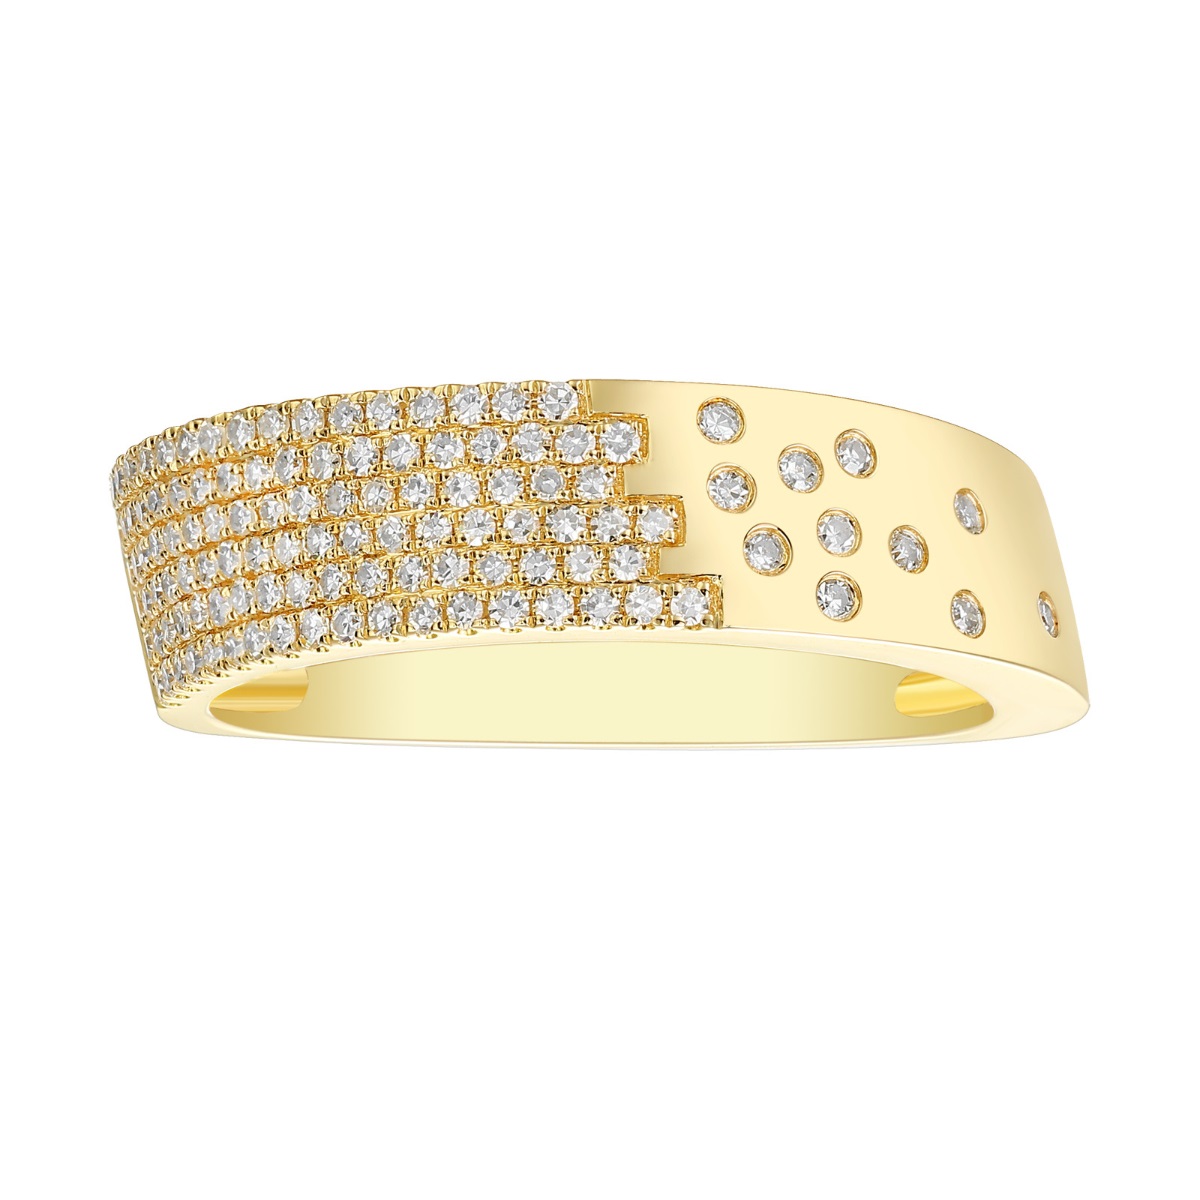 R37041WHT – 18K Yellow Gold Diamond Ring, 0.32 TCW